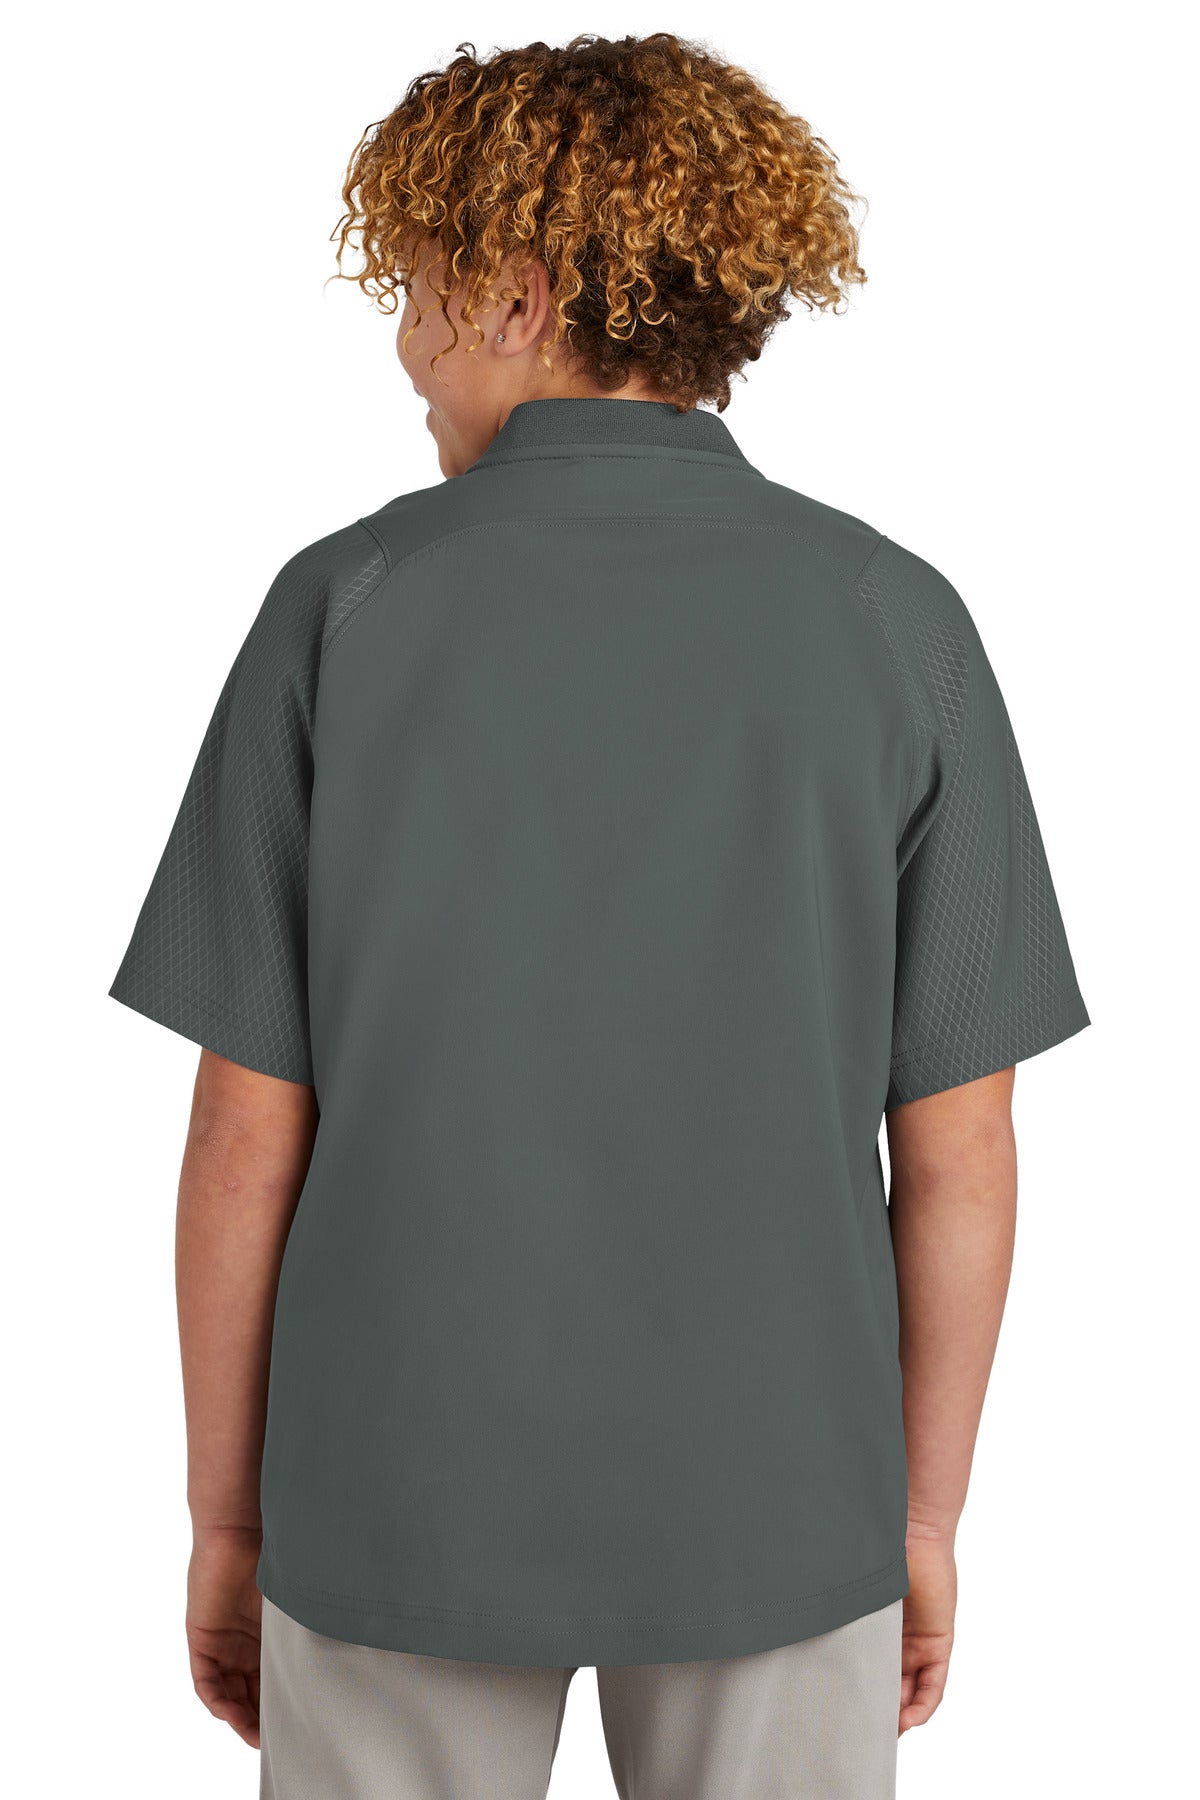 New Era Youth Cage Short Sleeve 1/4-Zip Jacket. YNEA600